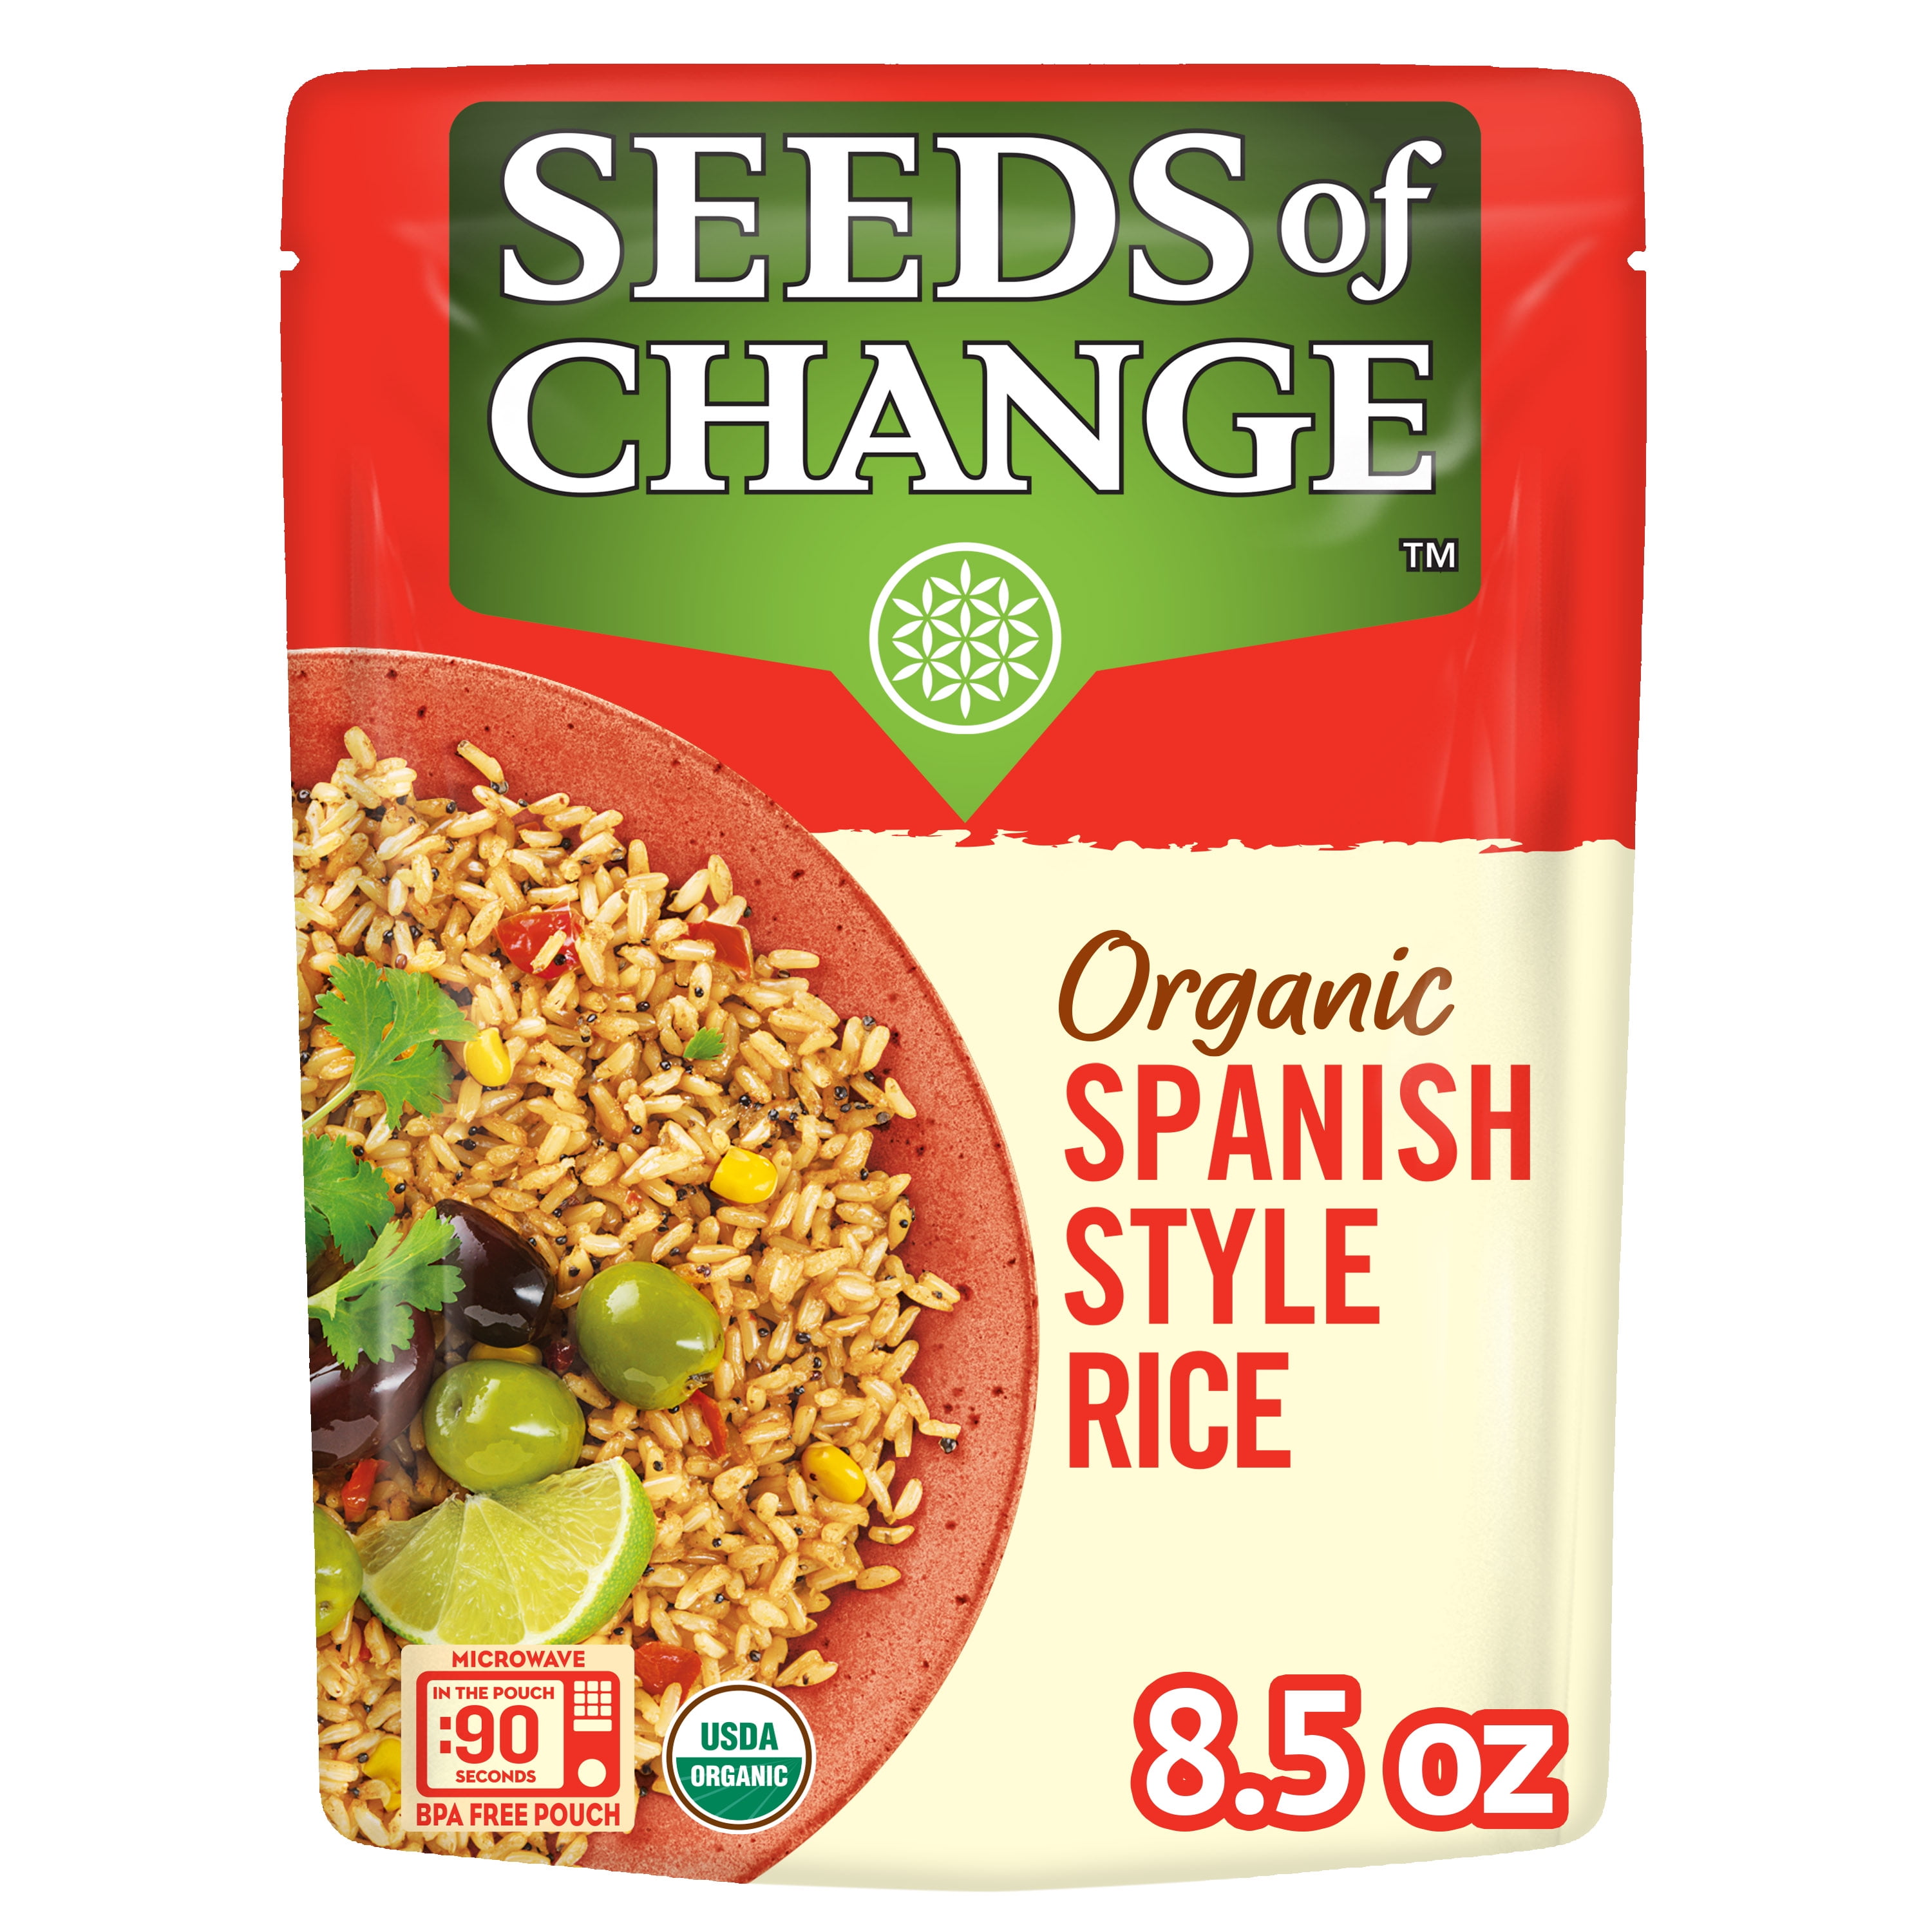 SEEDS OF CHANGE Organic Spanish Style Rice, 8.5oz - Walmart.com